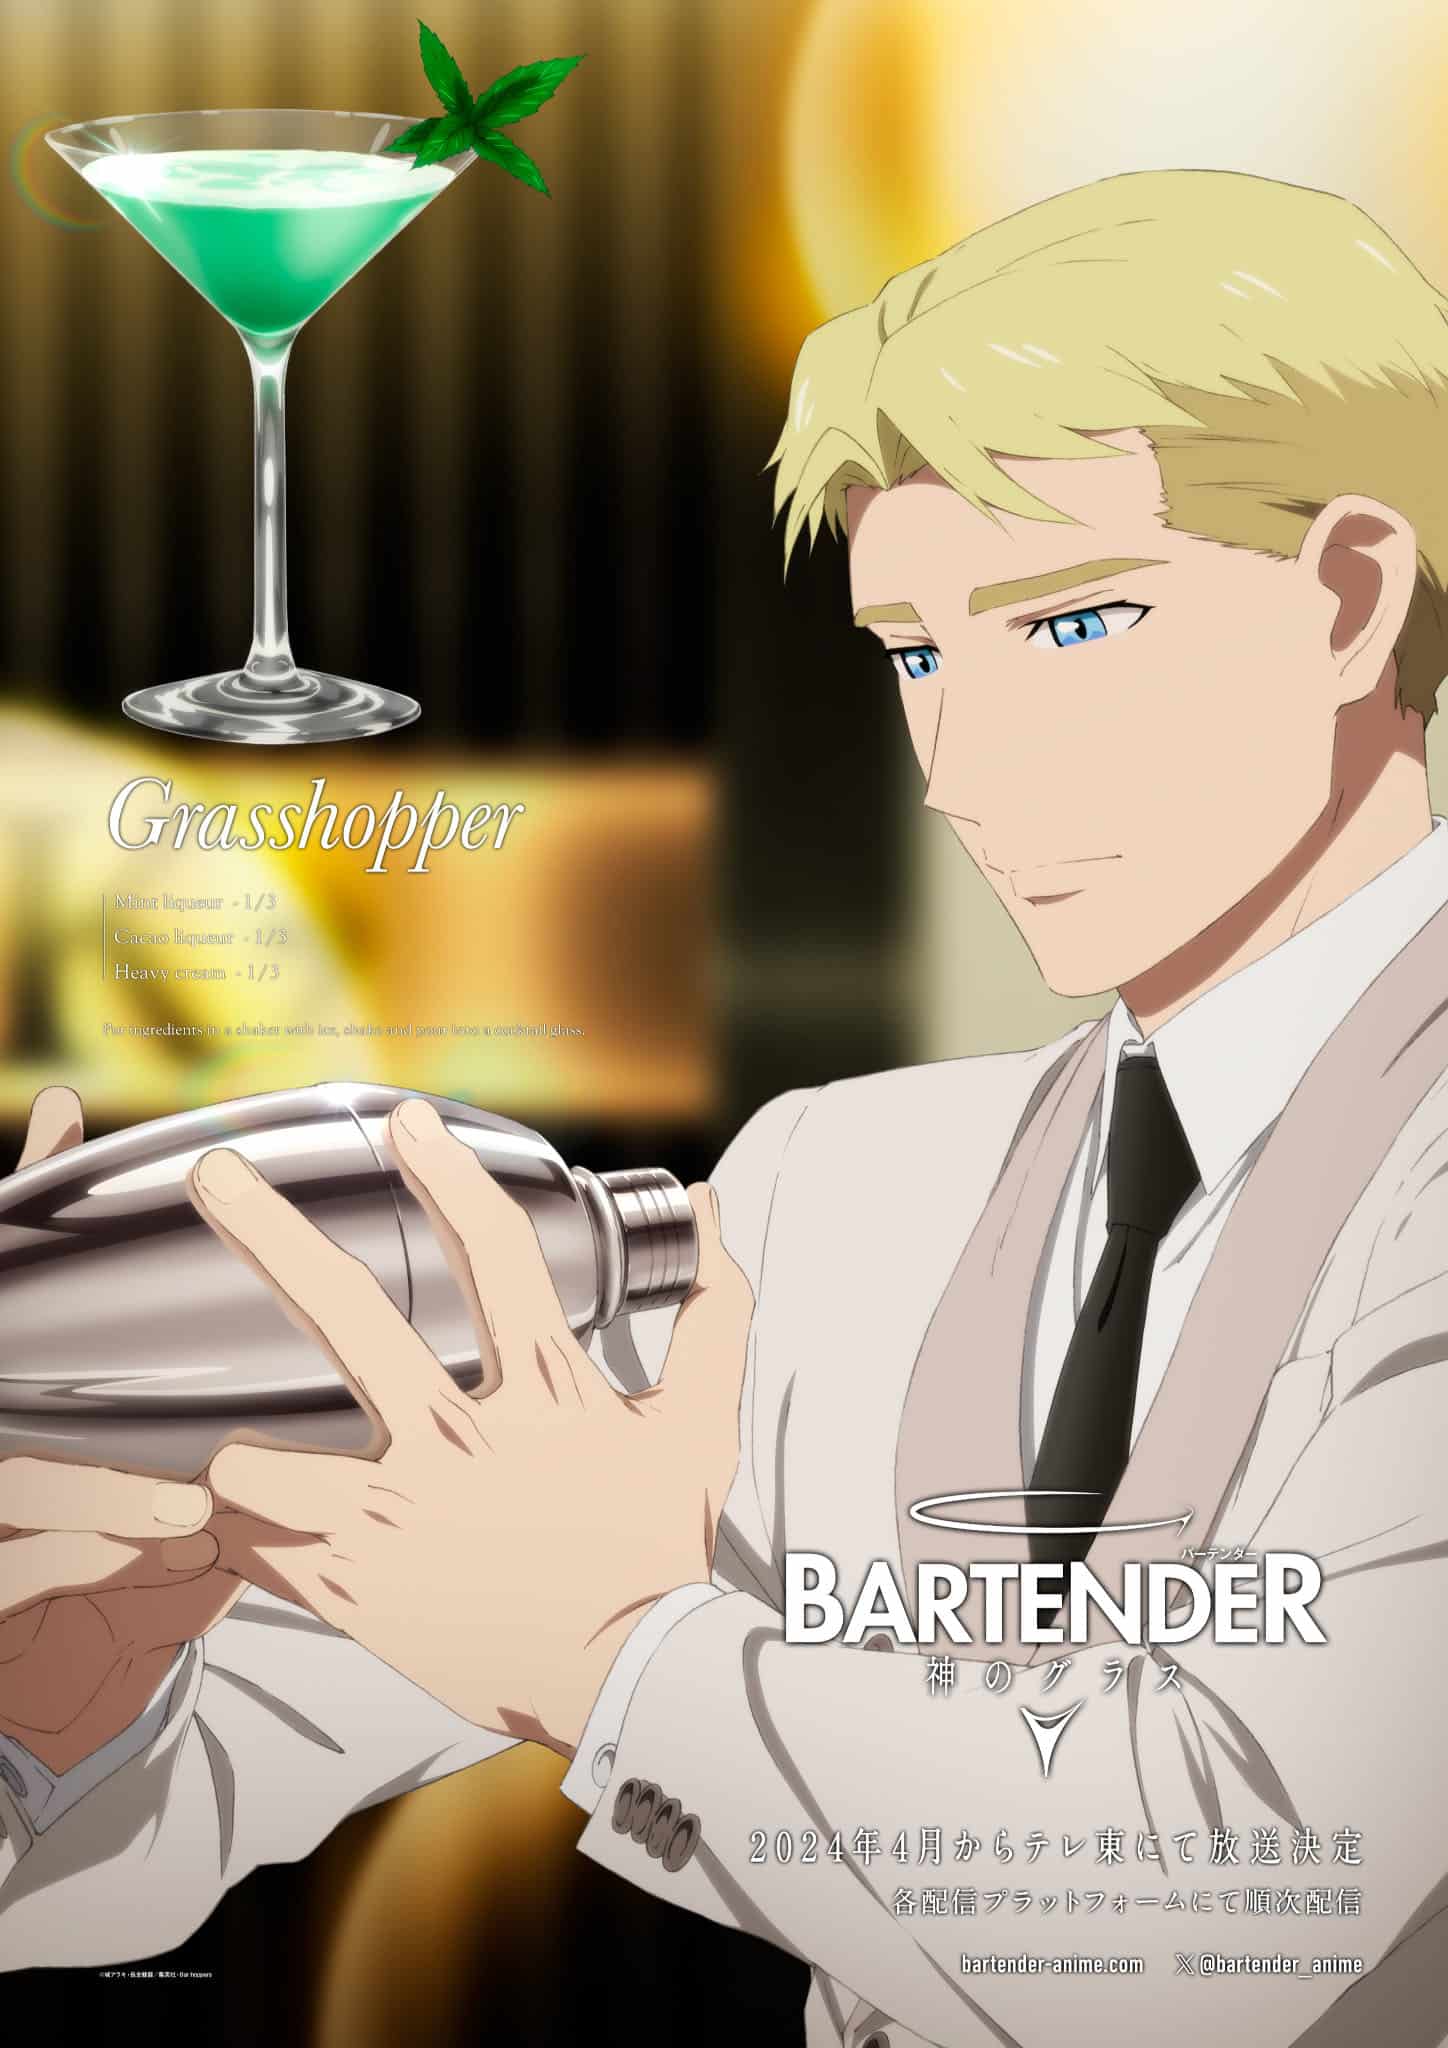 Visuel spécial Kelvin Chen pour l'anime Bartender 2024